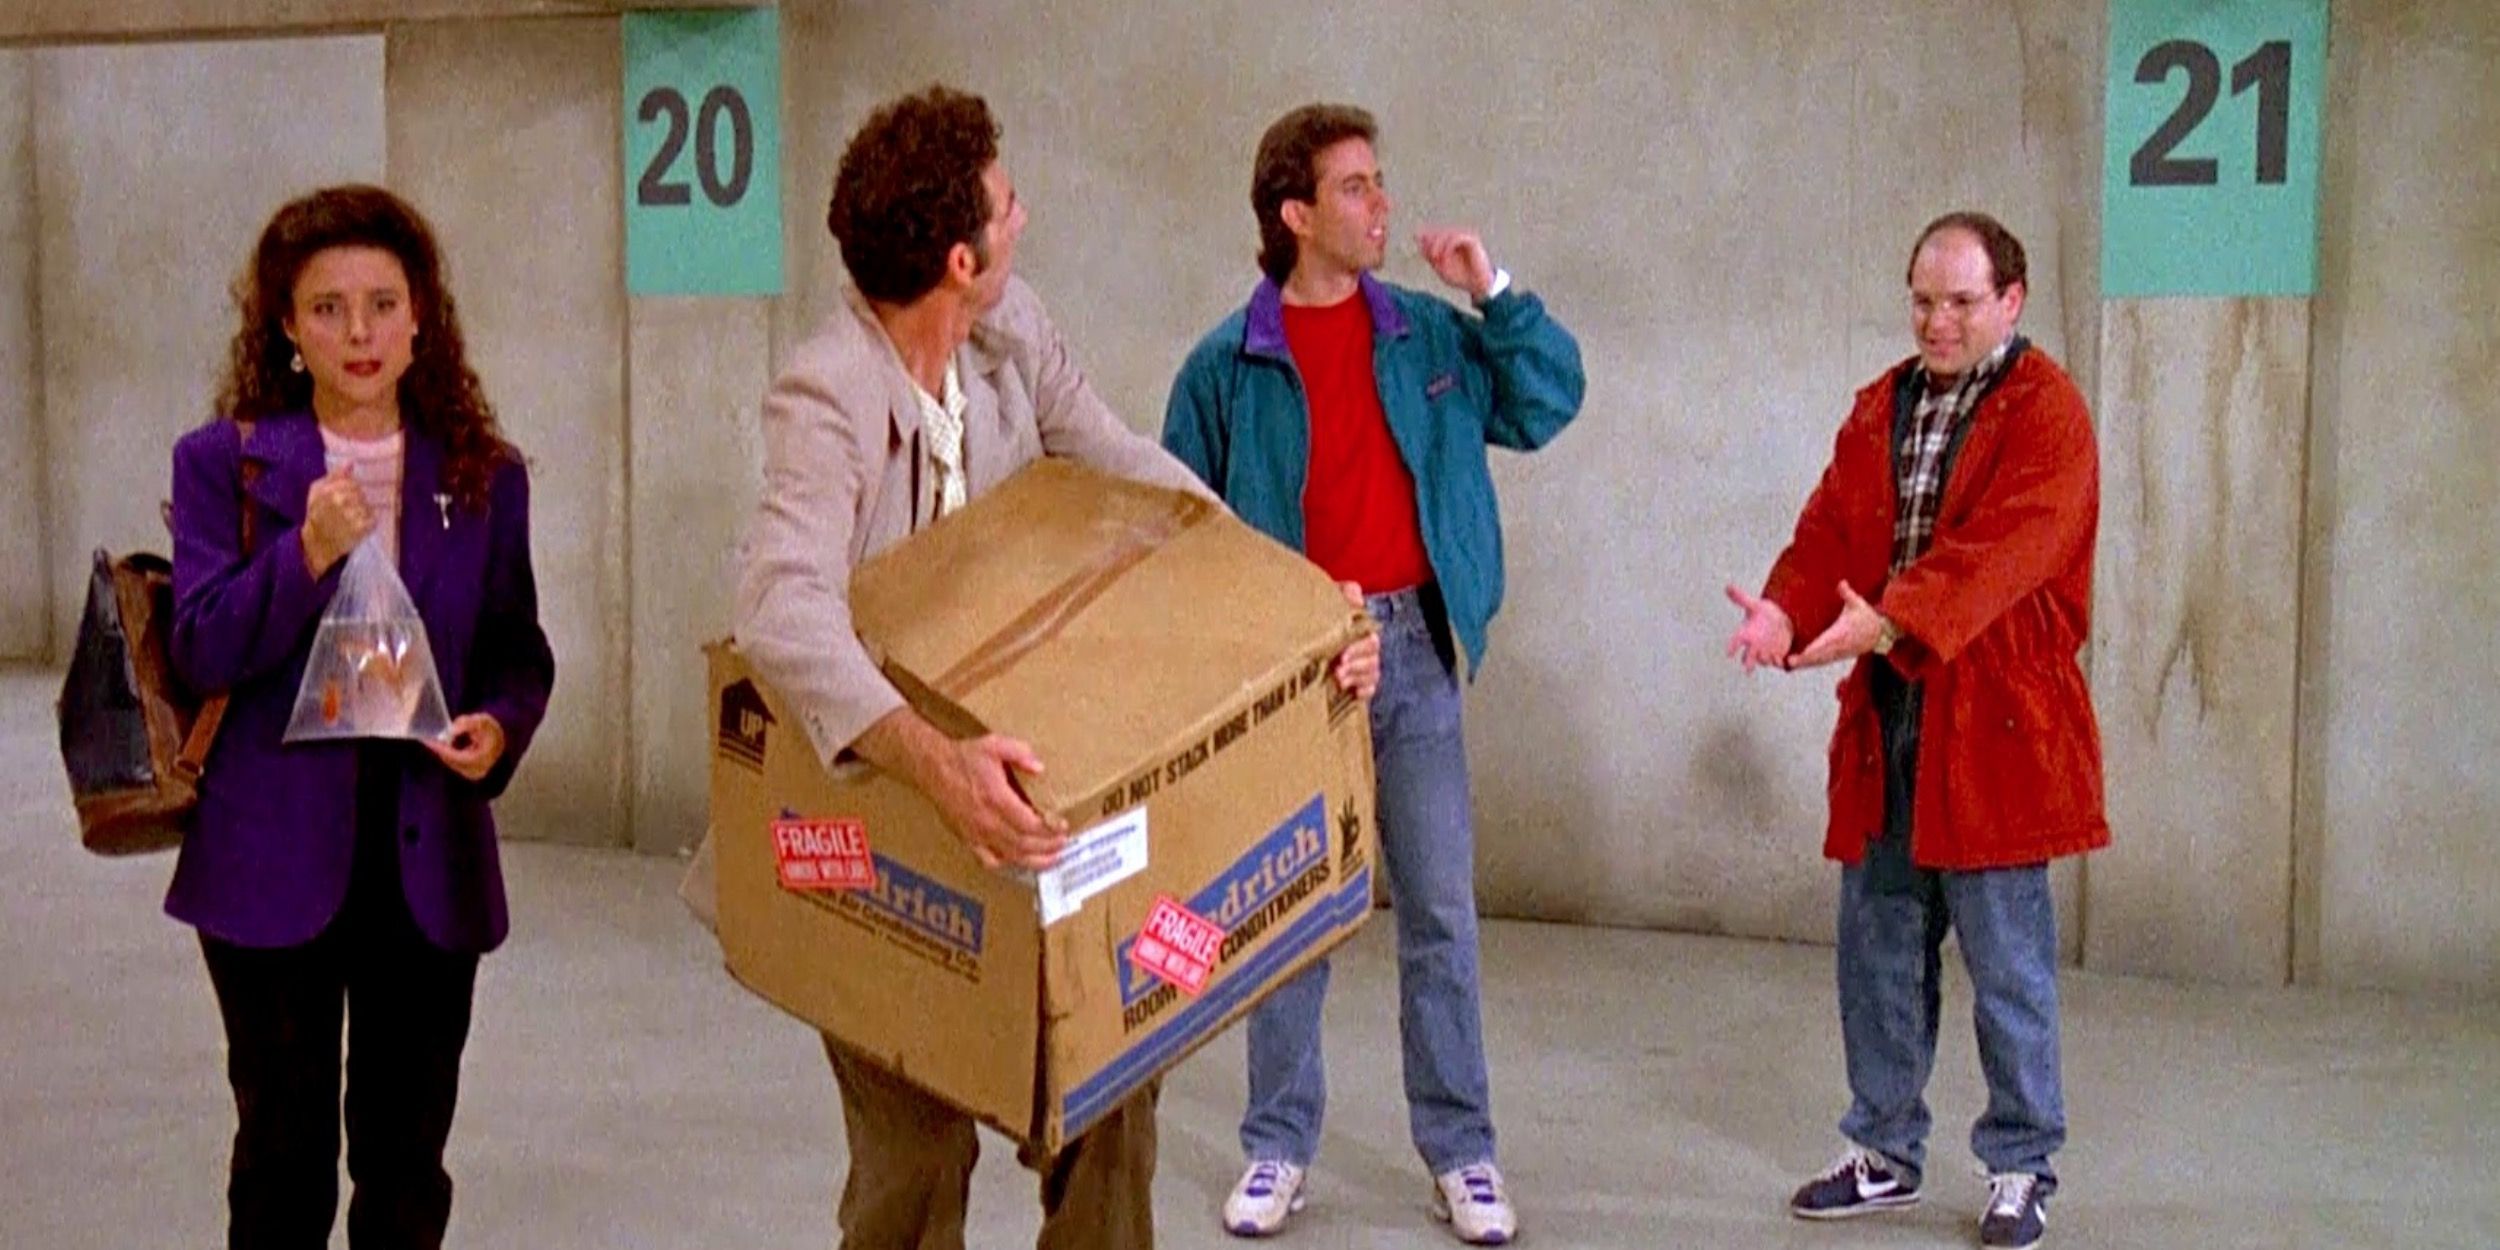 Elaine, George, Jerry and Kramer in a parking garage